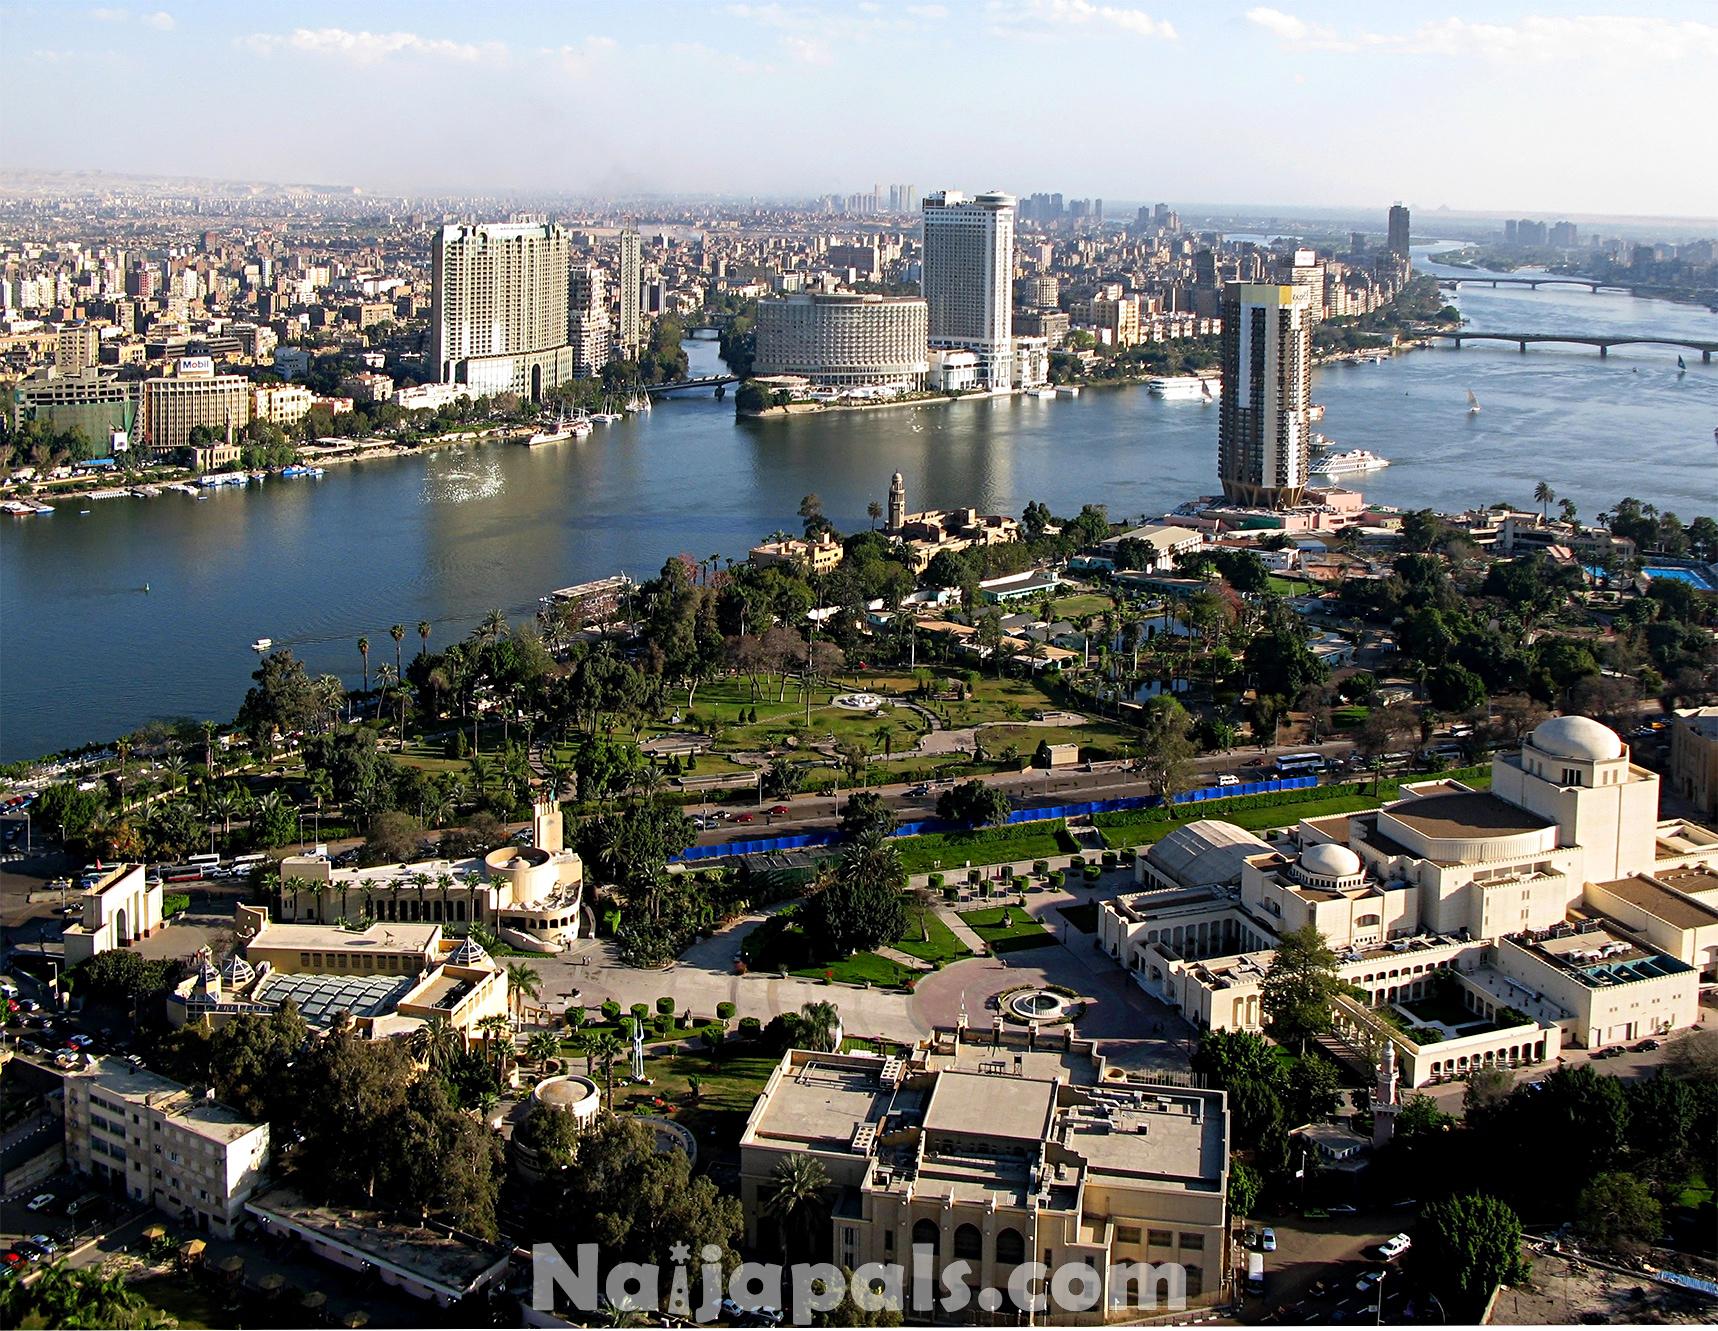 8. Cairo, Egypt